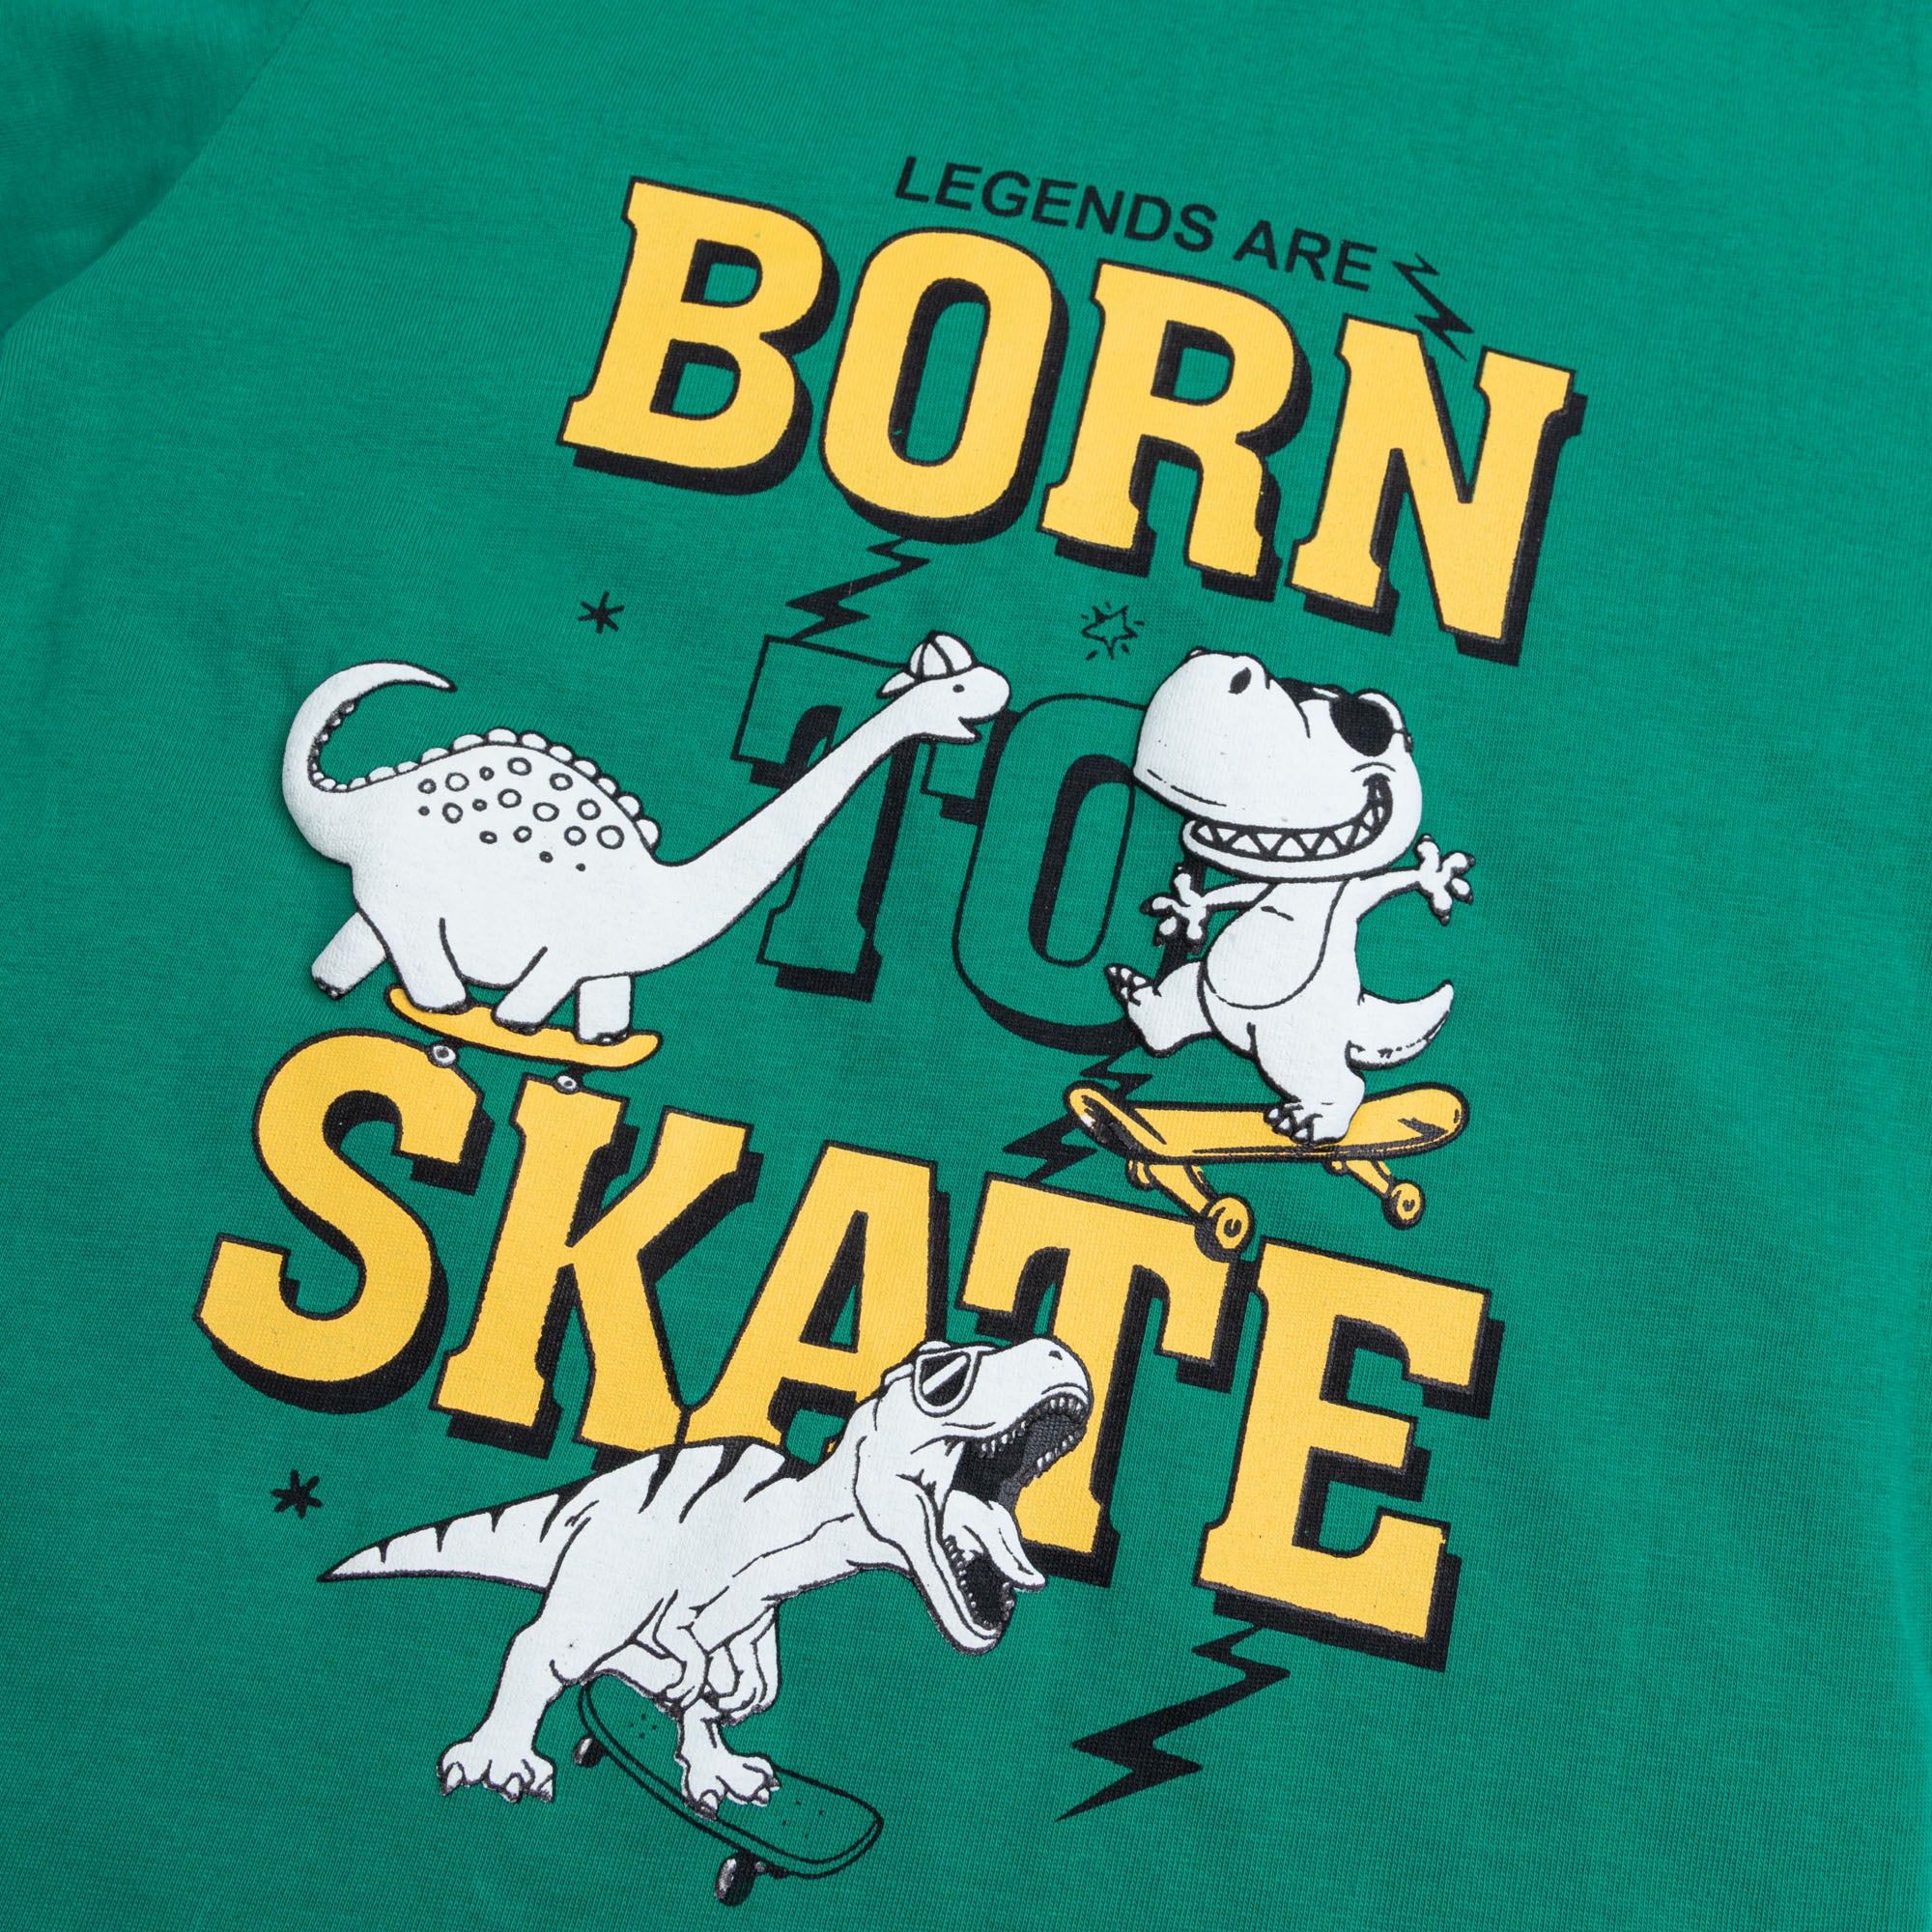 Skate Printed T-shirt